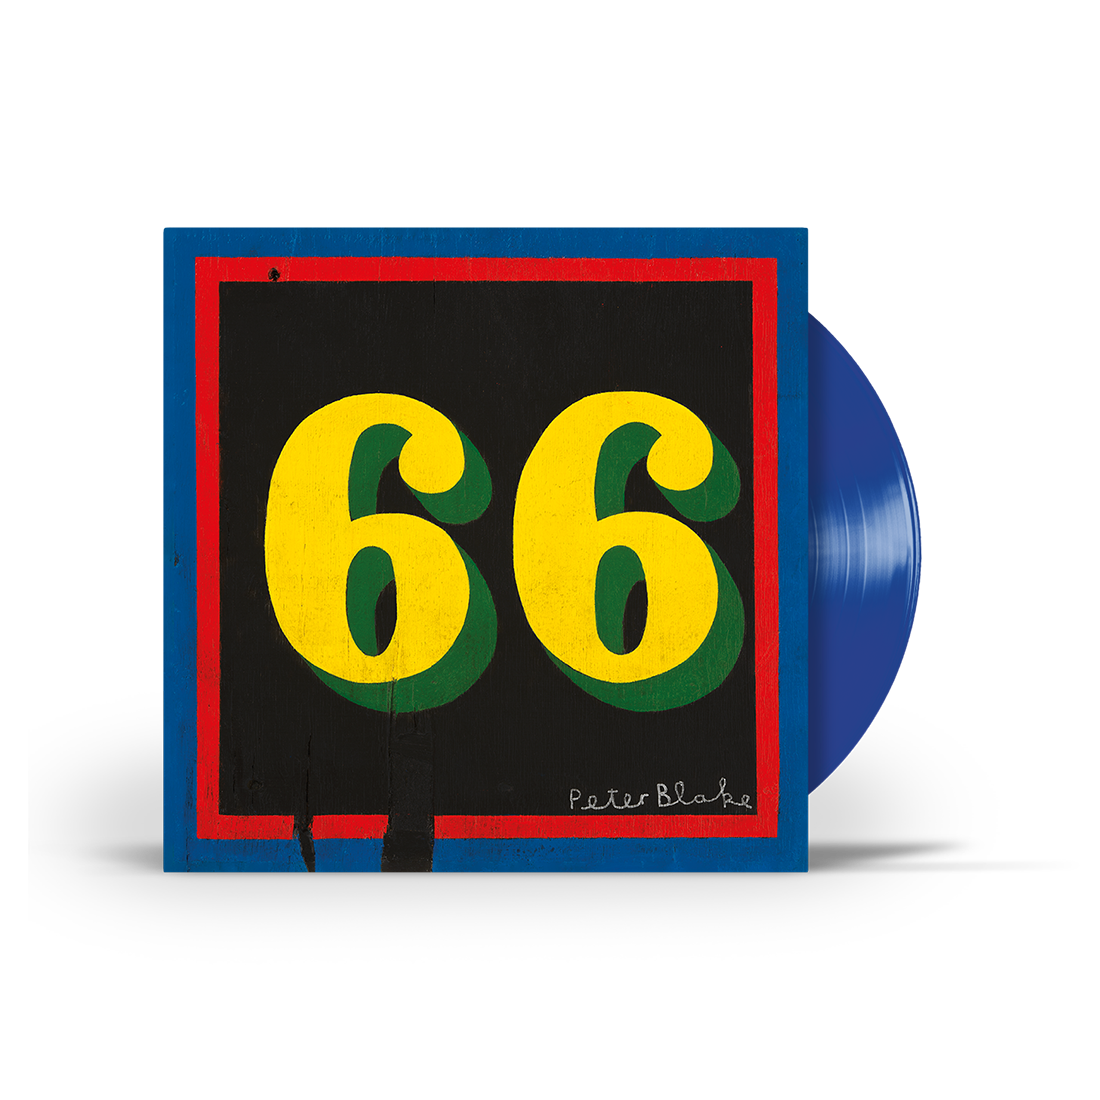 66: Limited Blue + Limited Green Vinyl LP